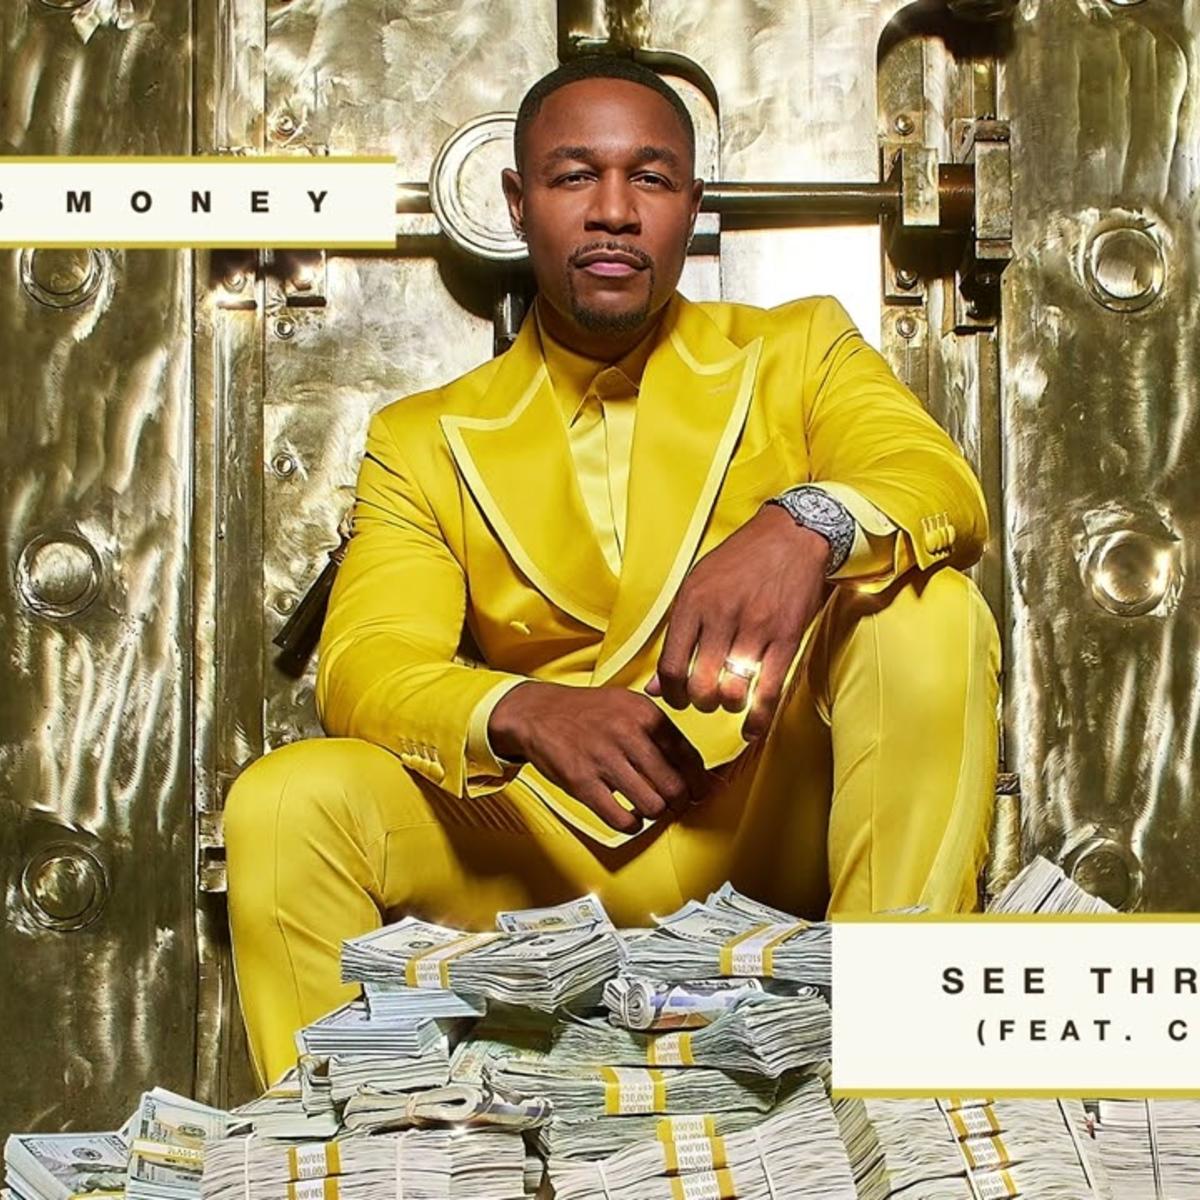 Listen To “R&B MONEY” By Tank